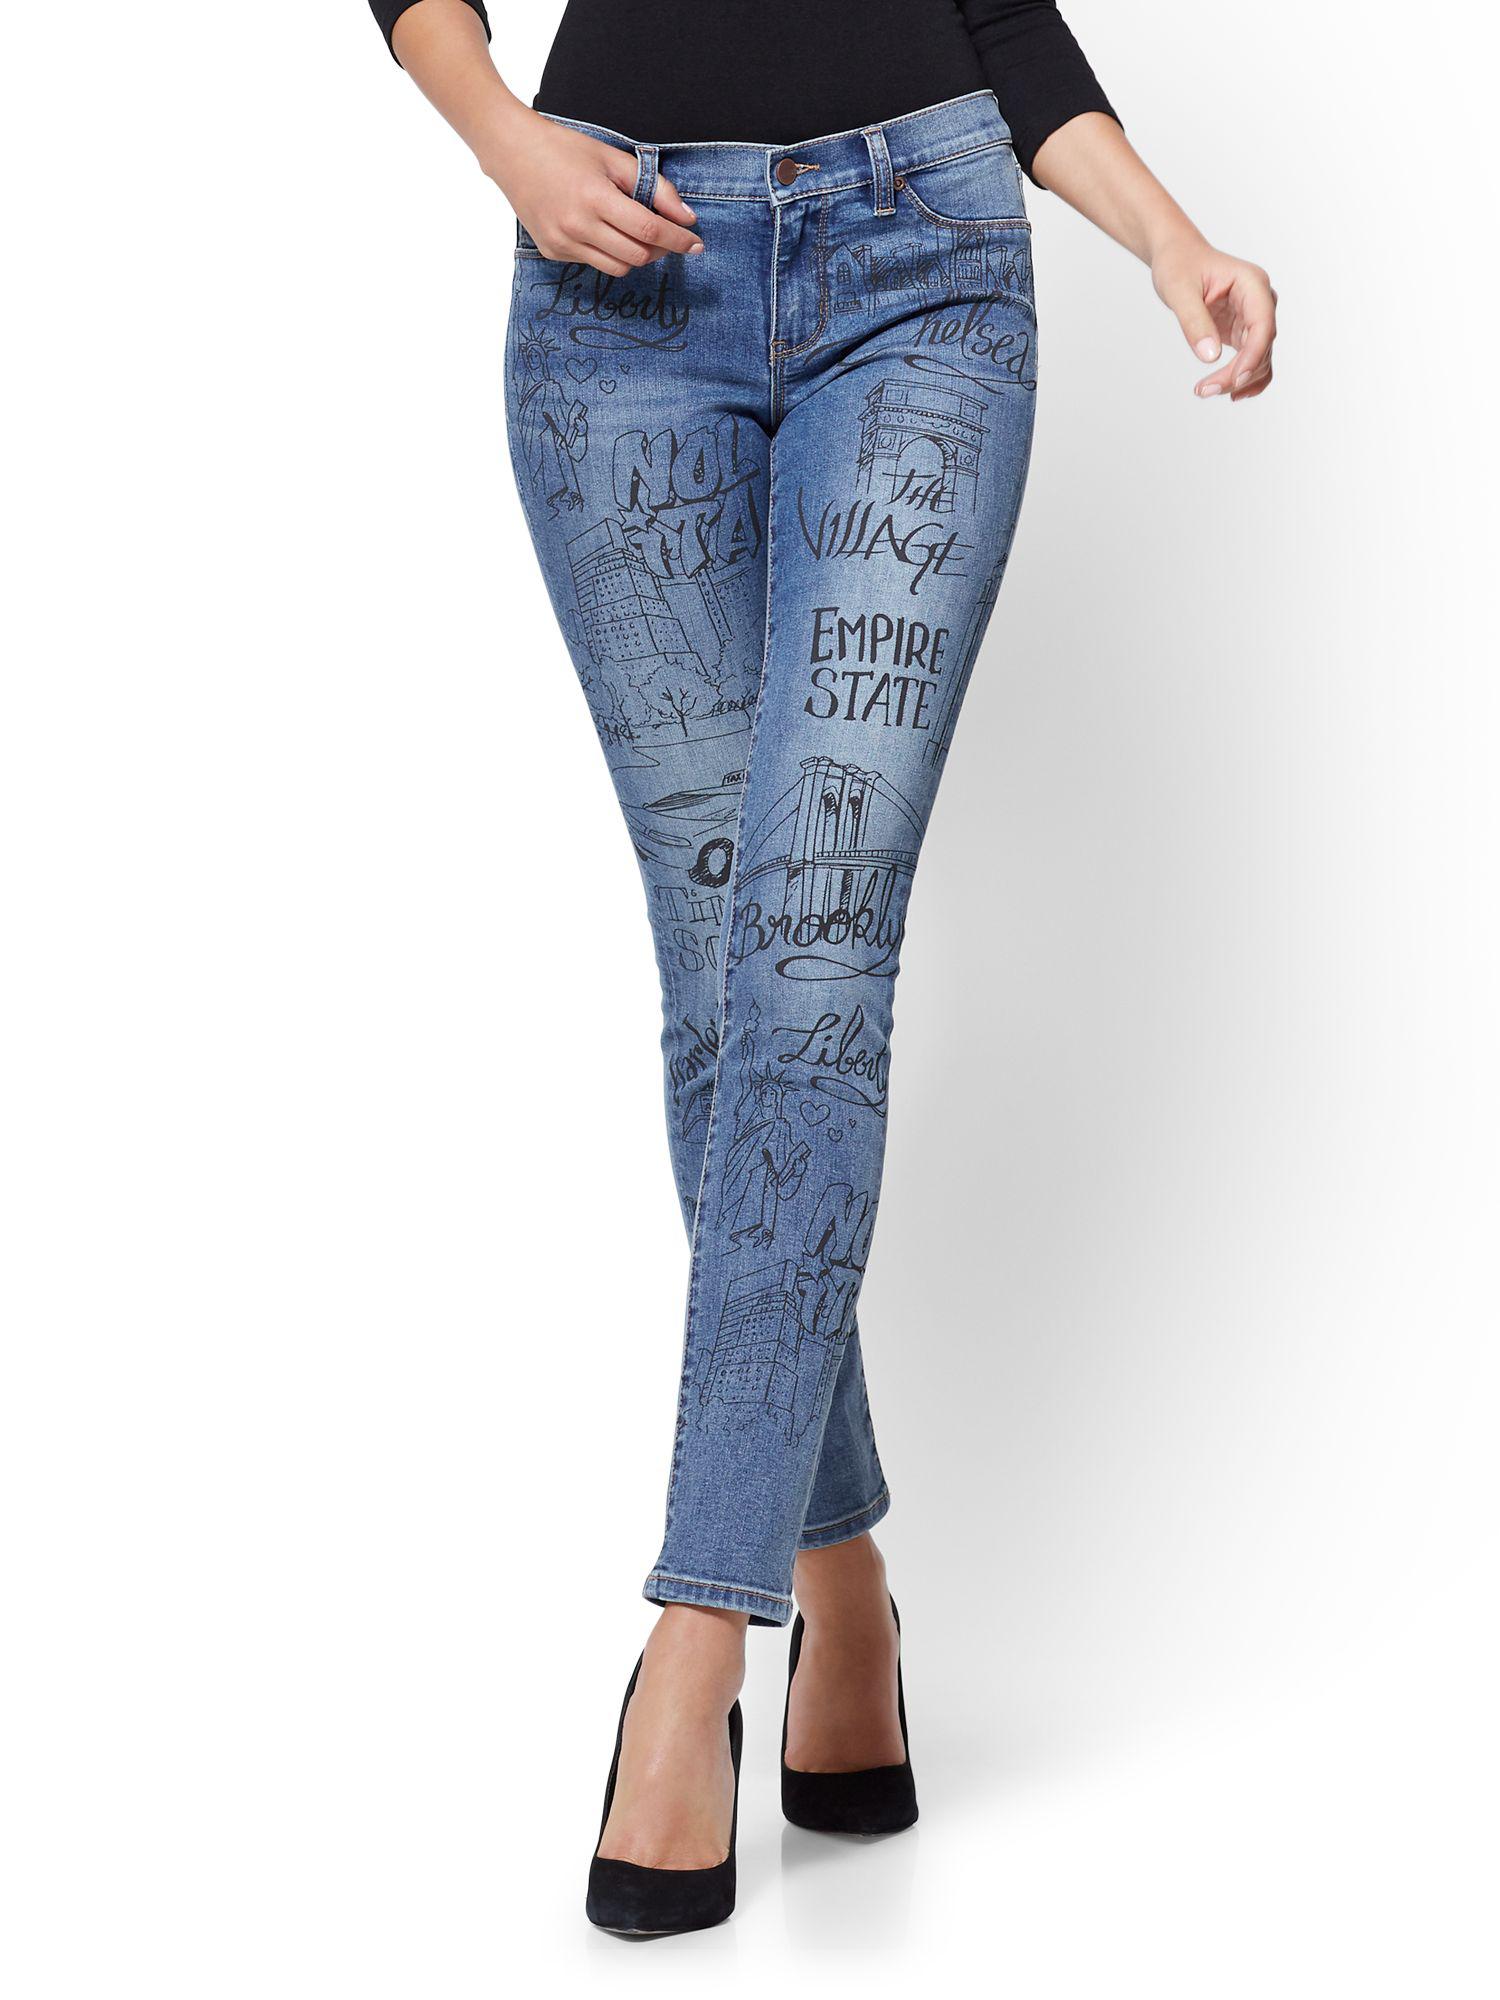 Skinny jeans kombinieren new york and company